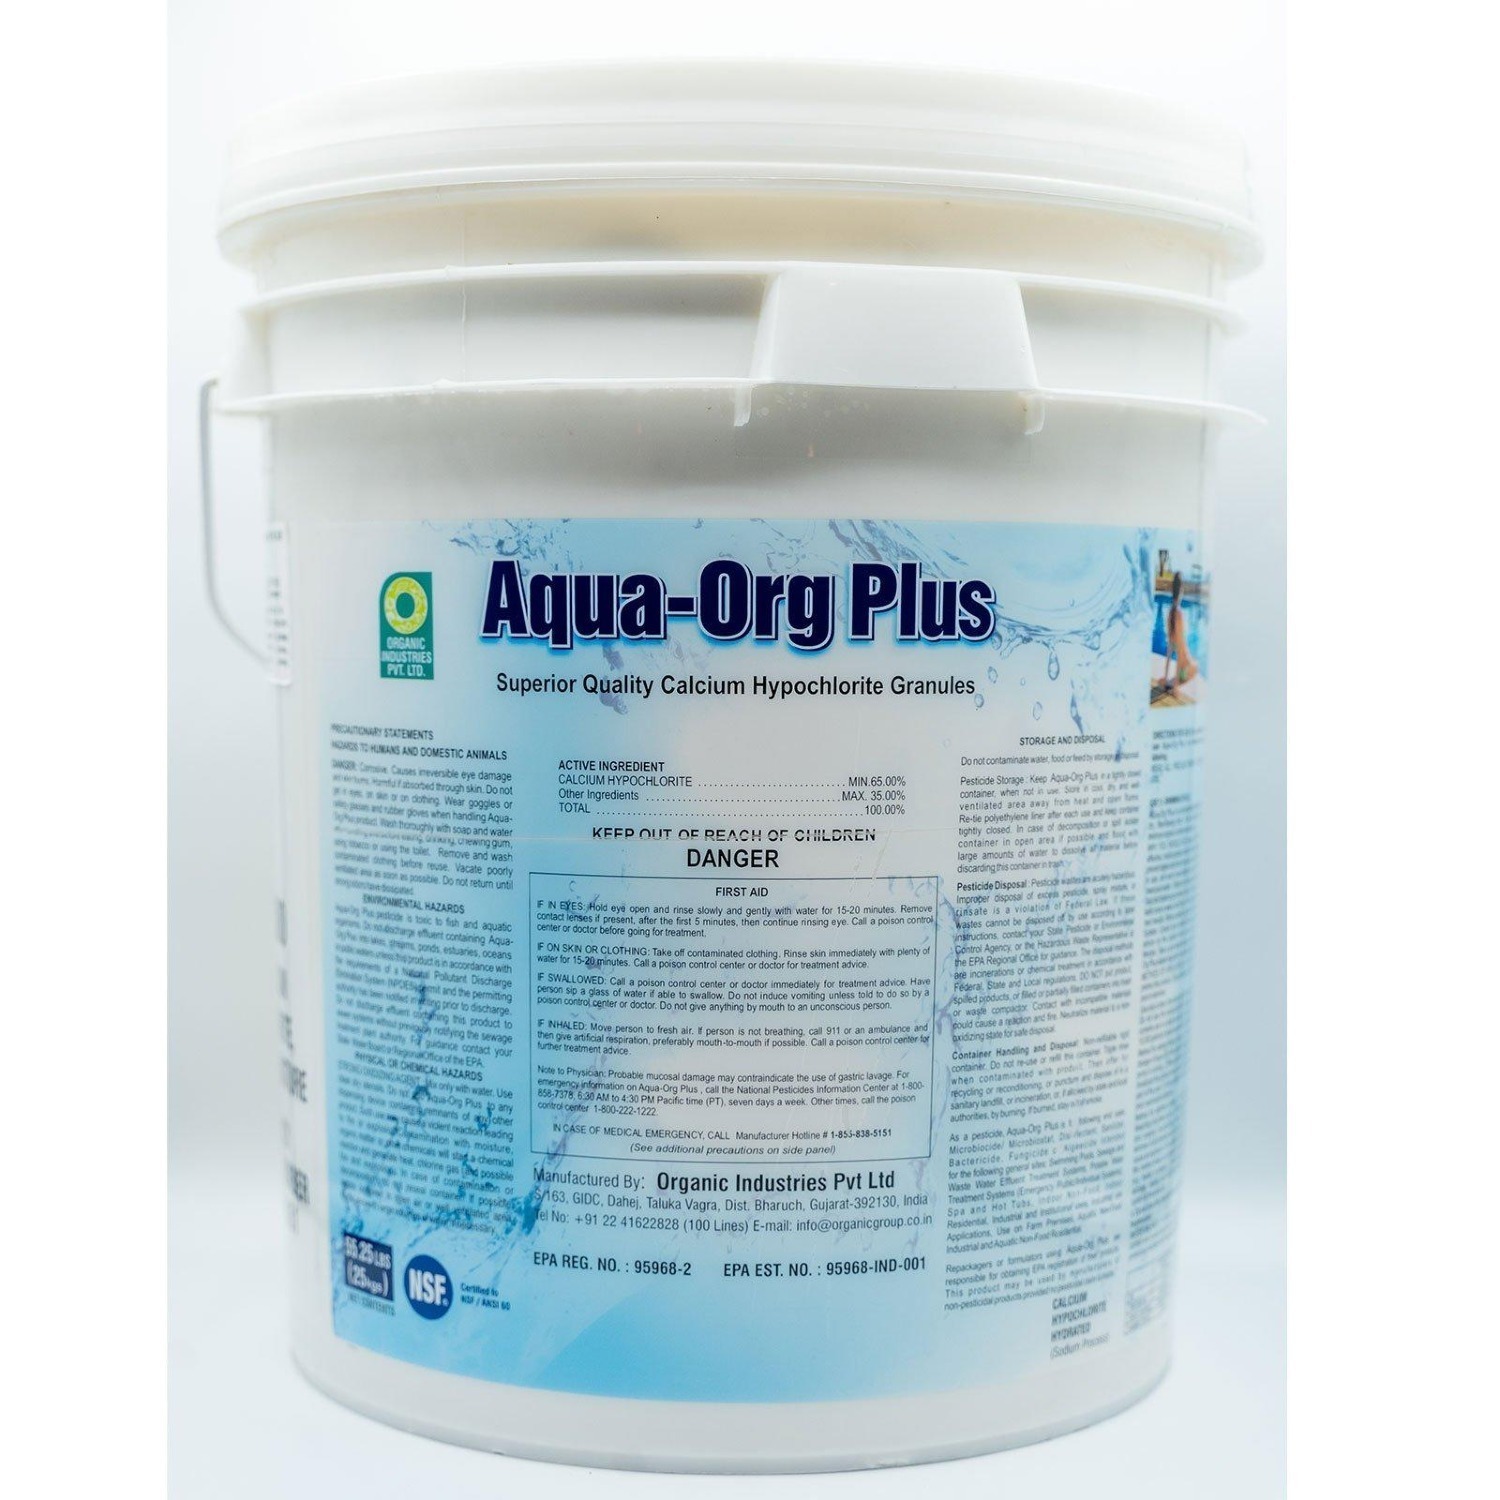 55lb Pyrock Chemical Aqua-Org Plus Calcium Hypochlorite Granules $150 + Free Shipping